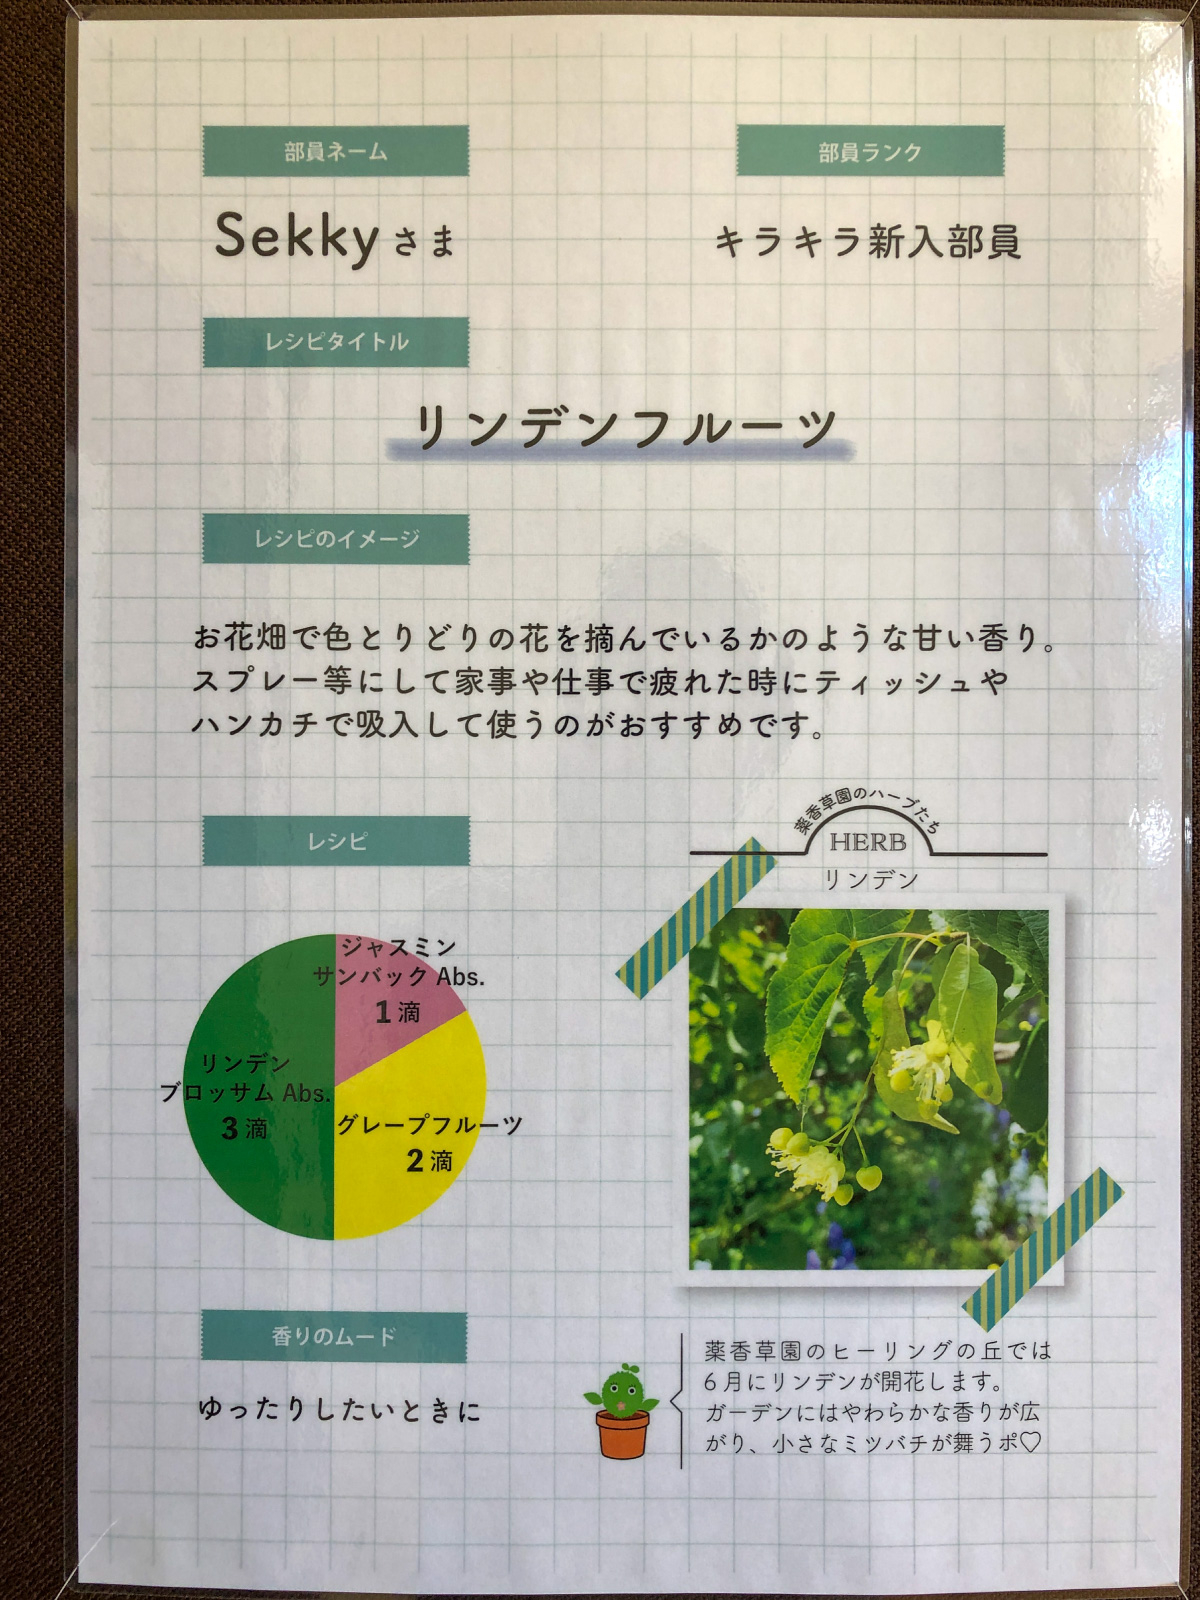 https://www.treeoflife.co.jp/library/aromabu/images/poster_2_sekky.jpg